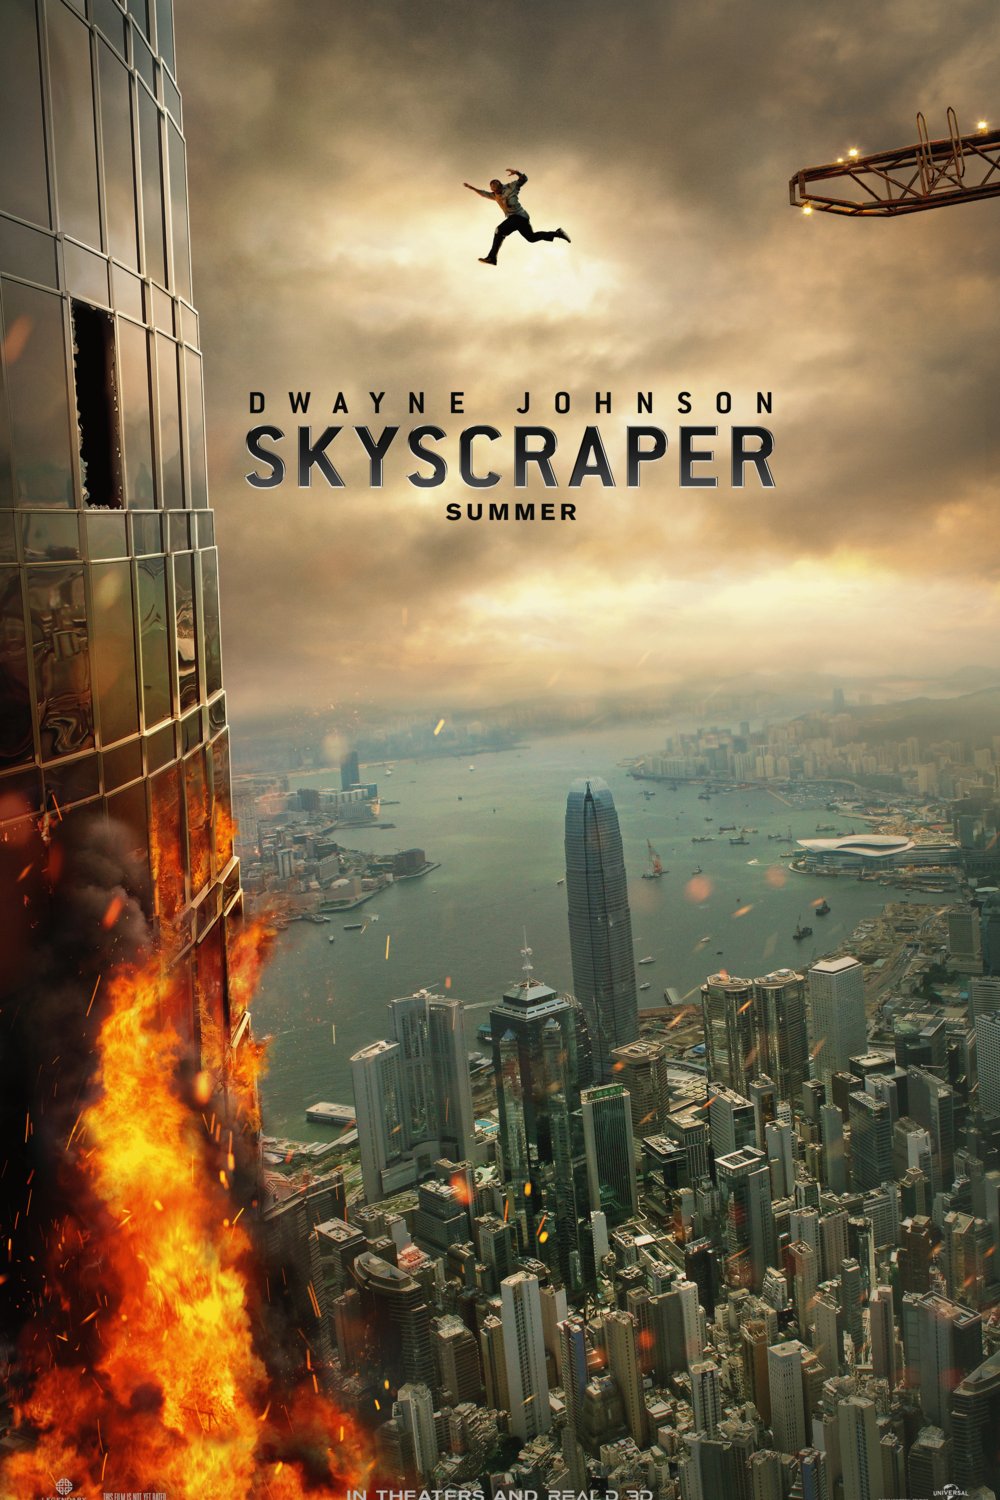 Skyscraper movie information